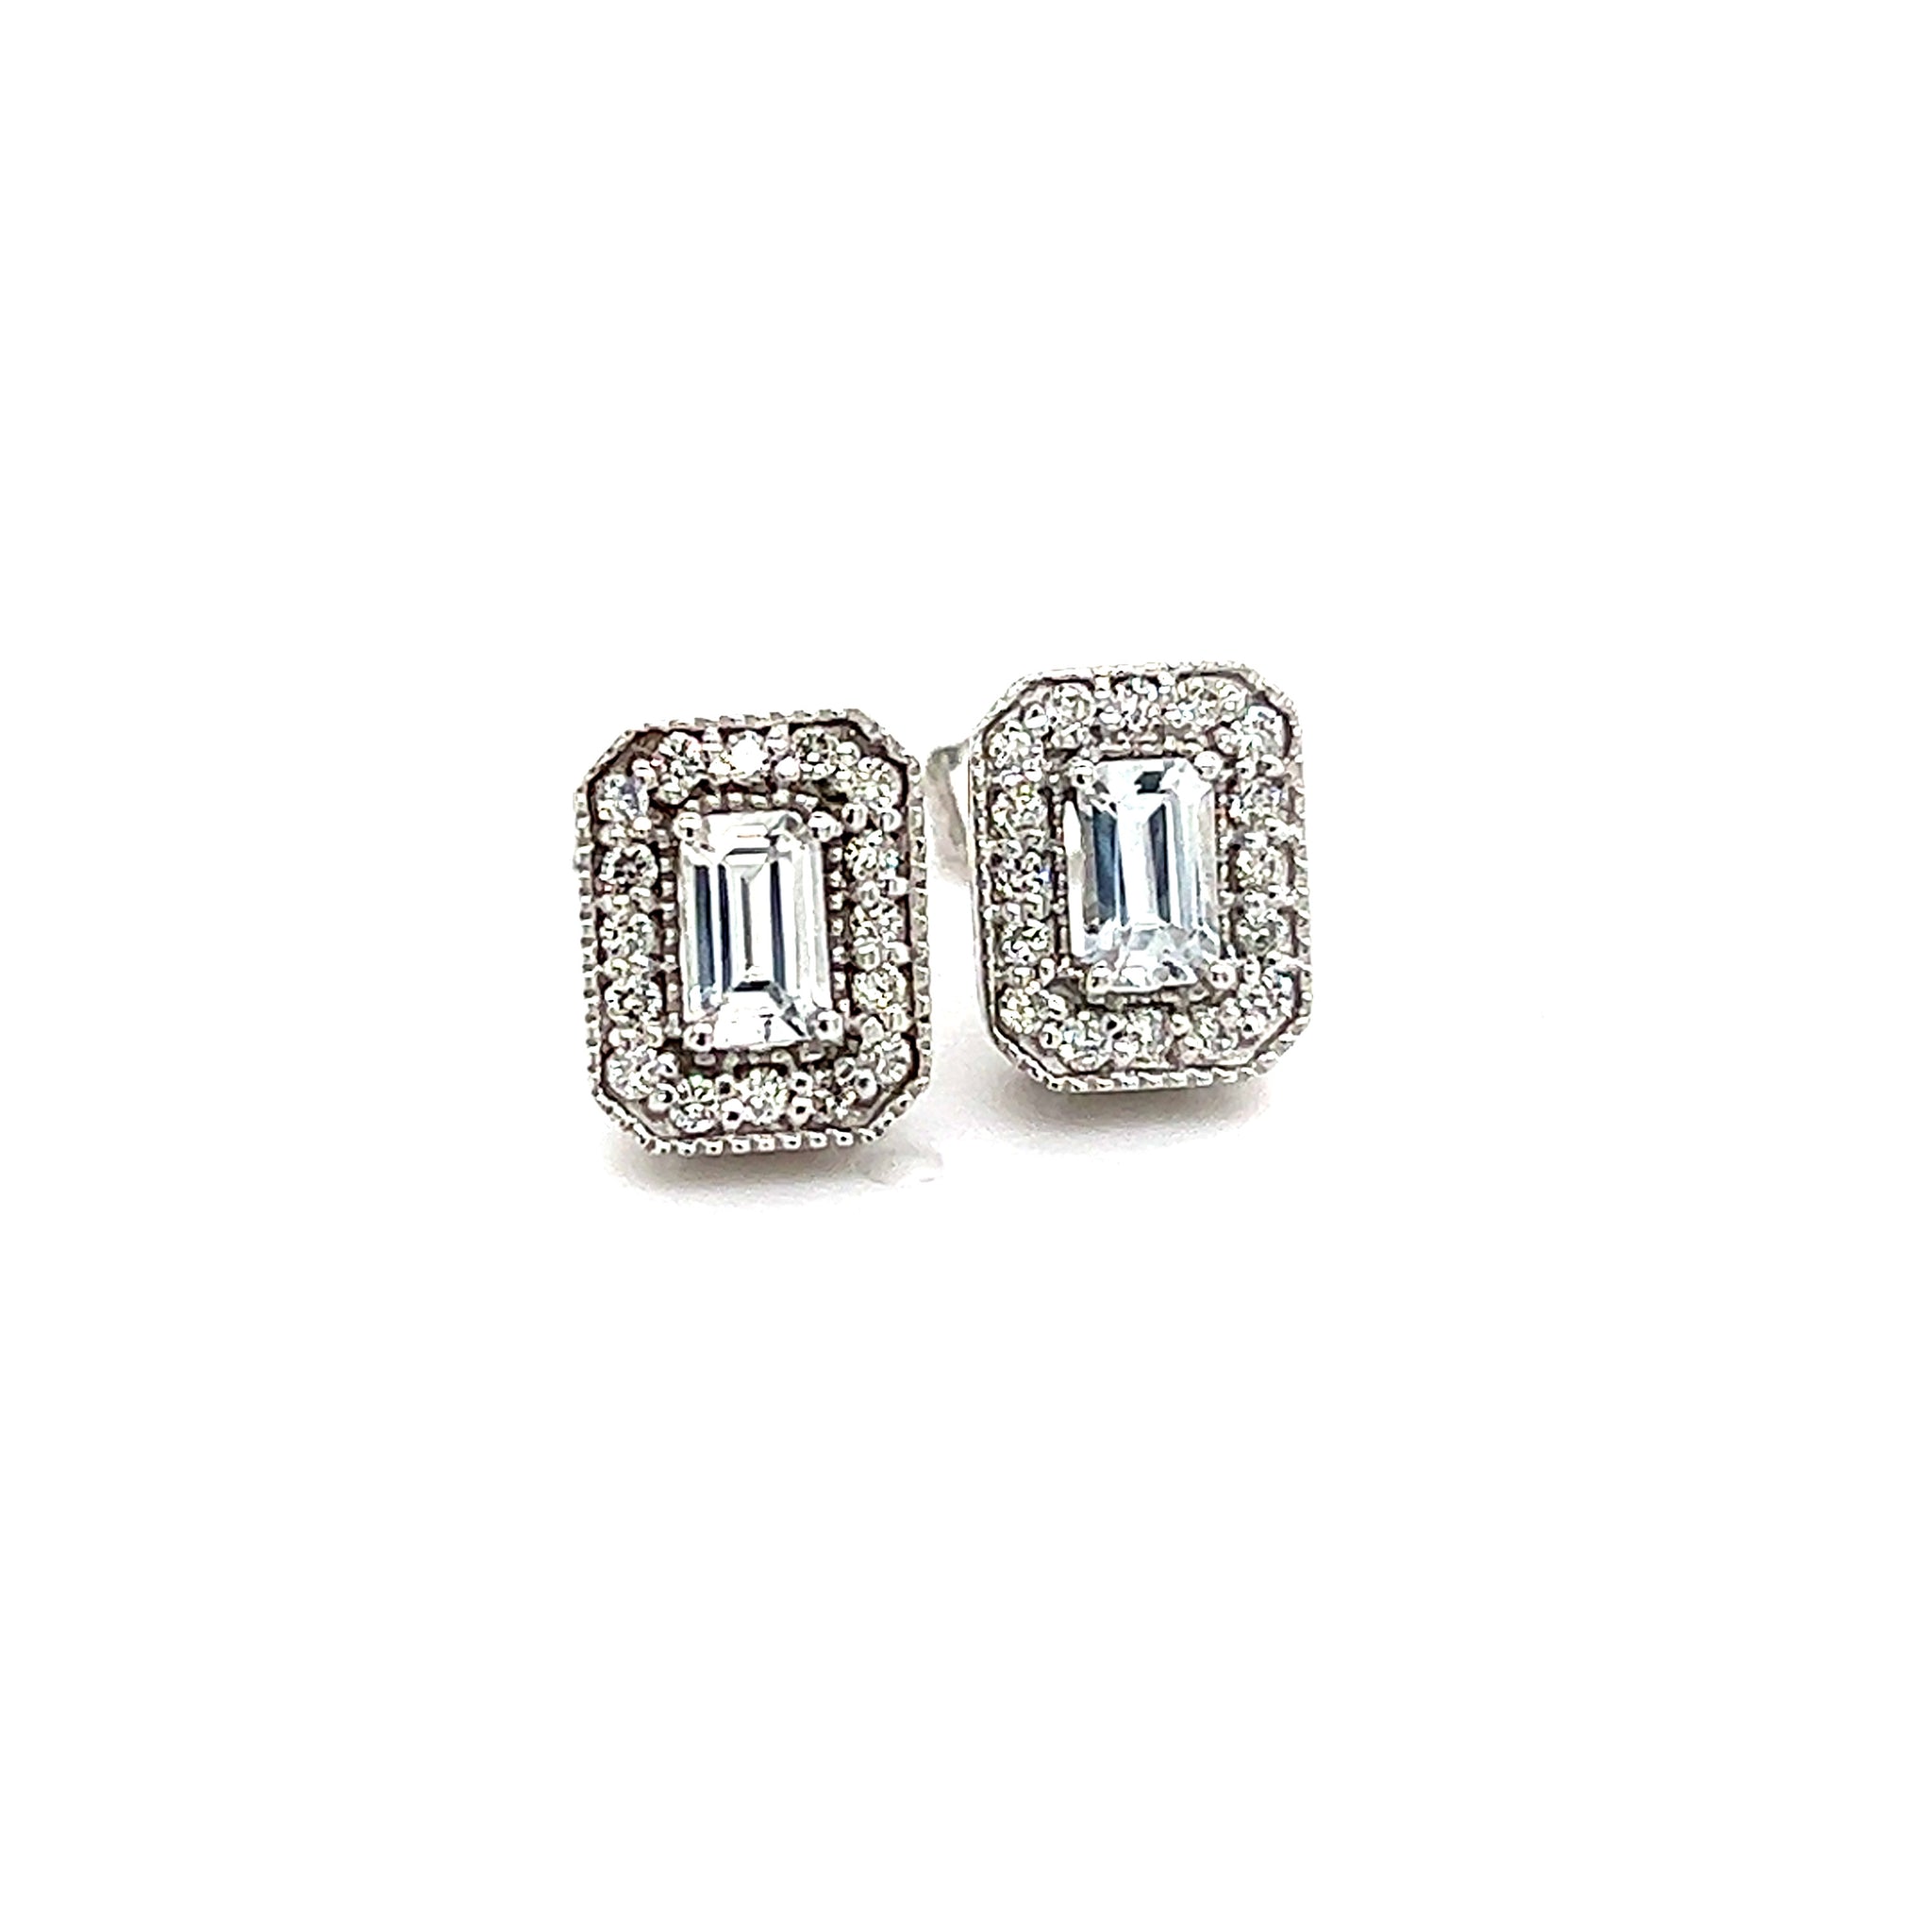 Natural Sapphire Diamond Stud Earrings 14k W Gold 0.96 TCW Certified $2950 121269